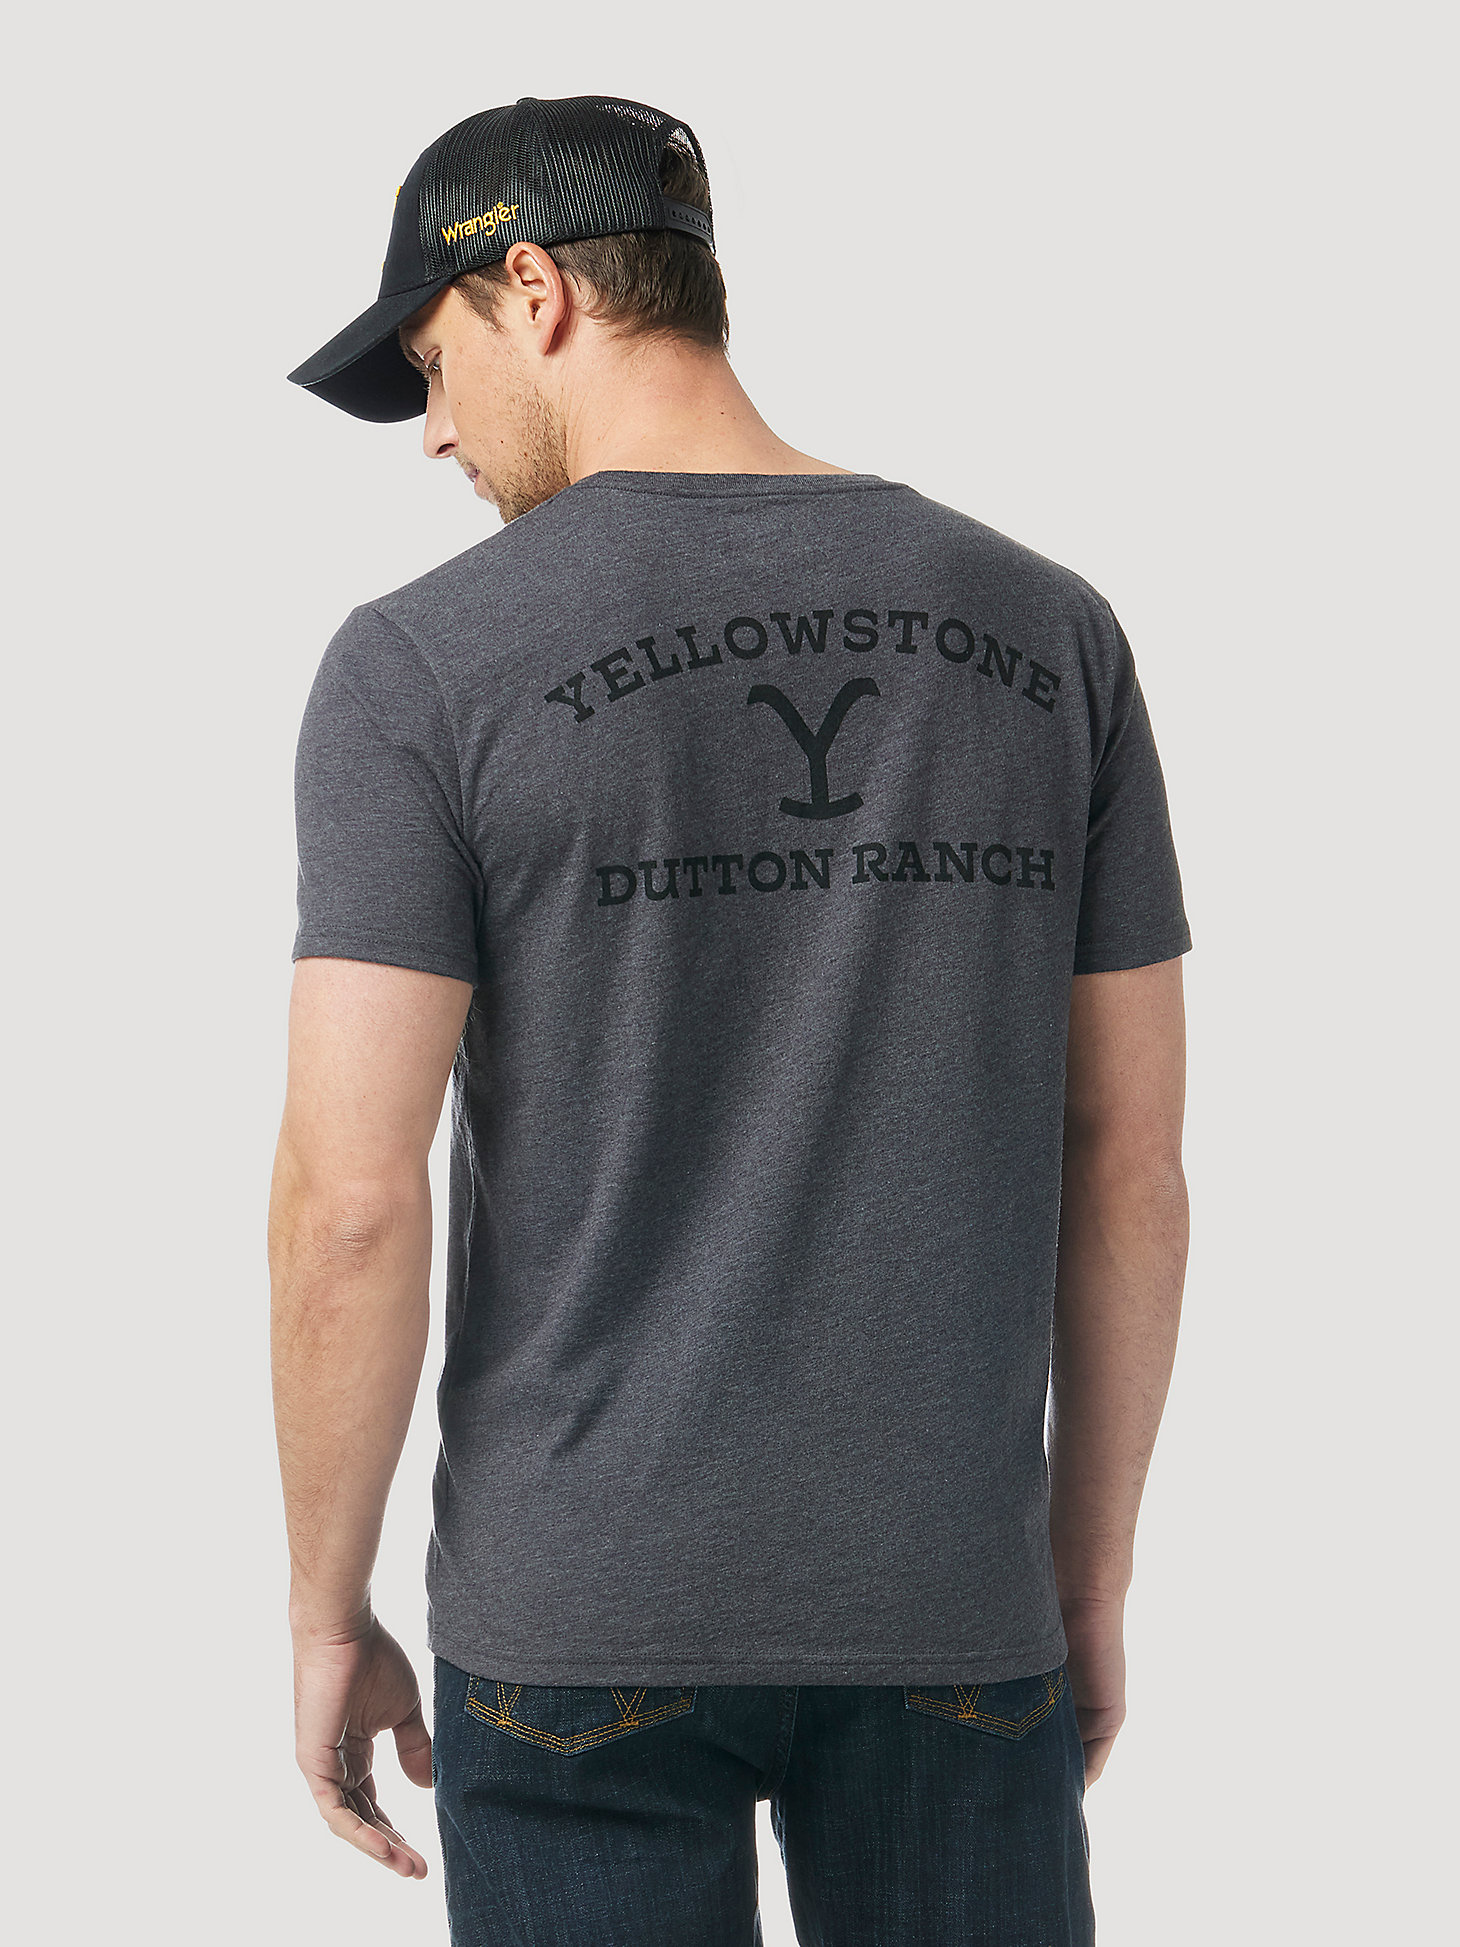 Wrangler x Yellowstone Men's Y Logo T-Shirt in Charcoal Heather alternative view 1